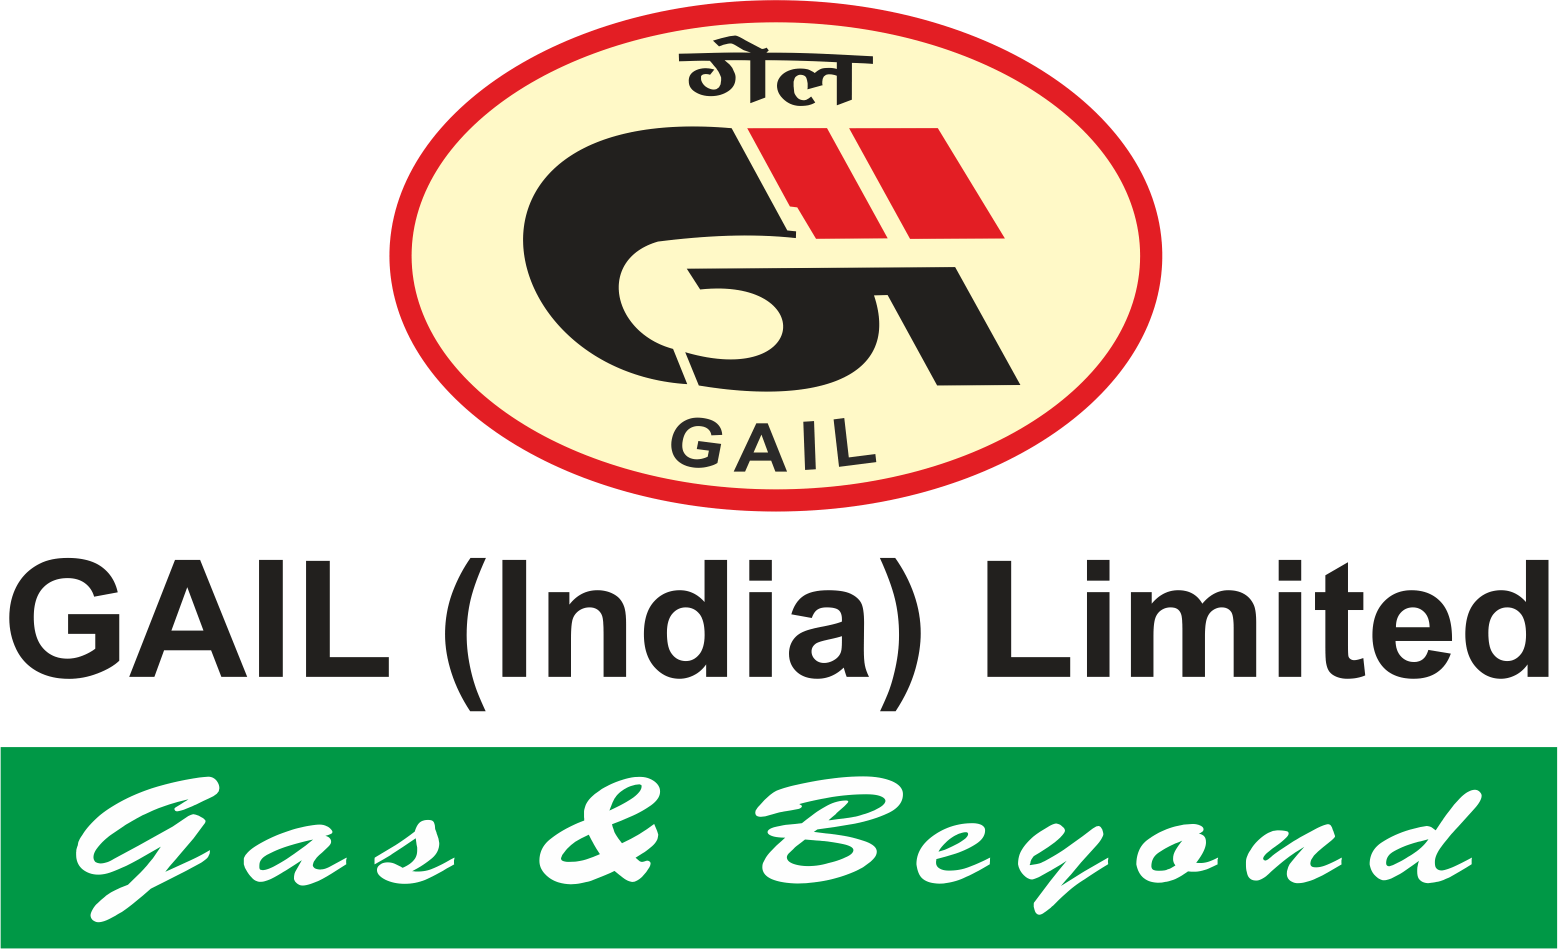 GAIL(india)limited logo